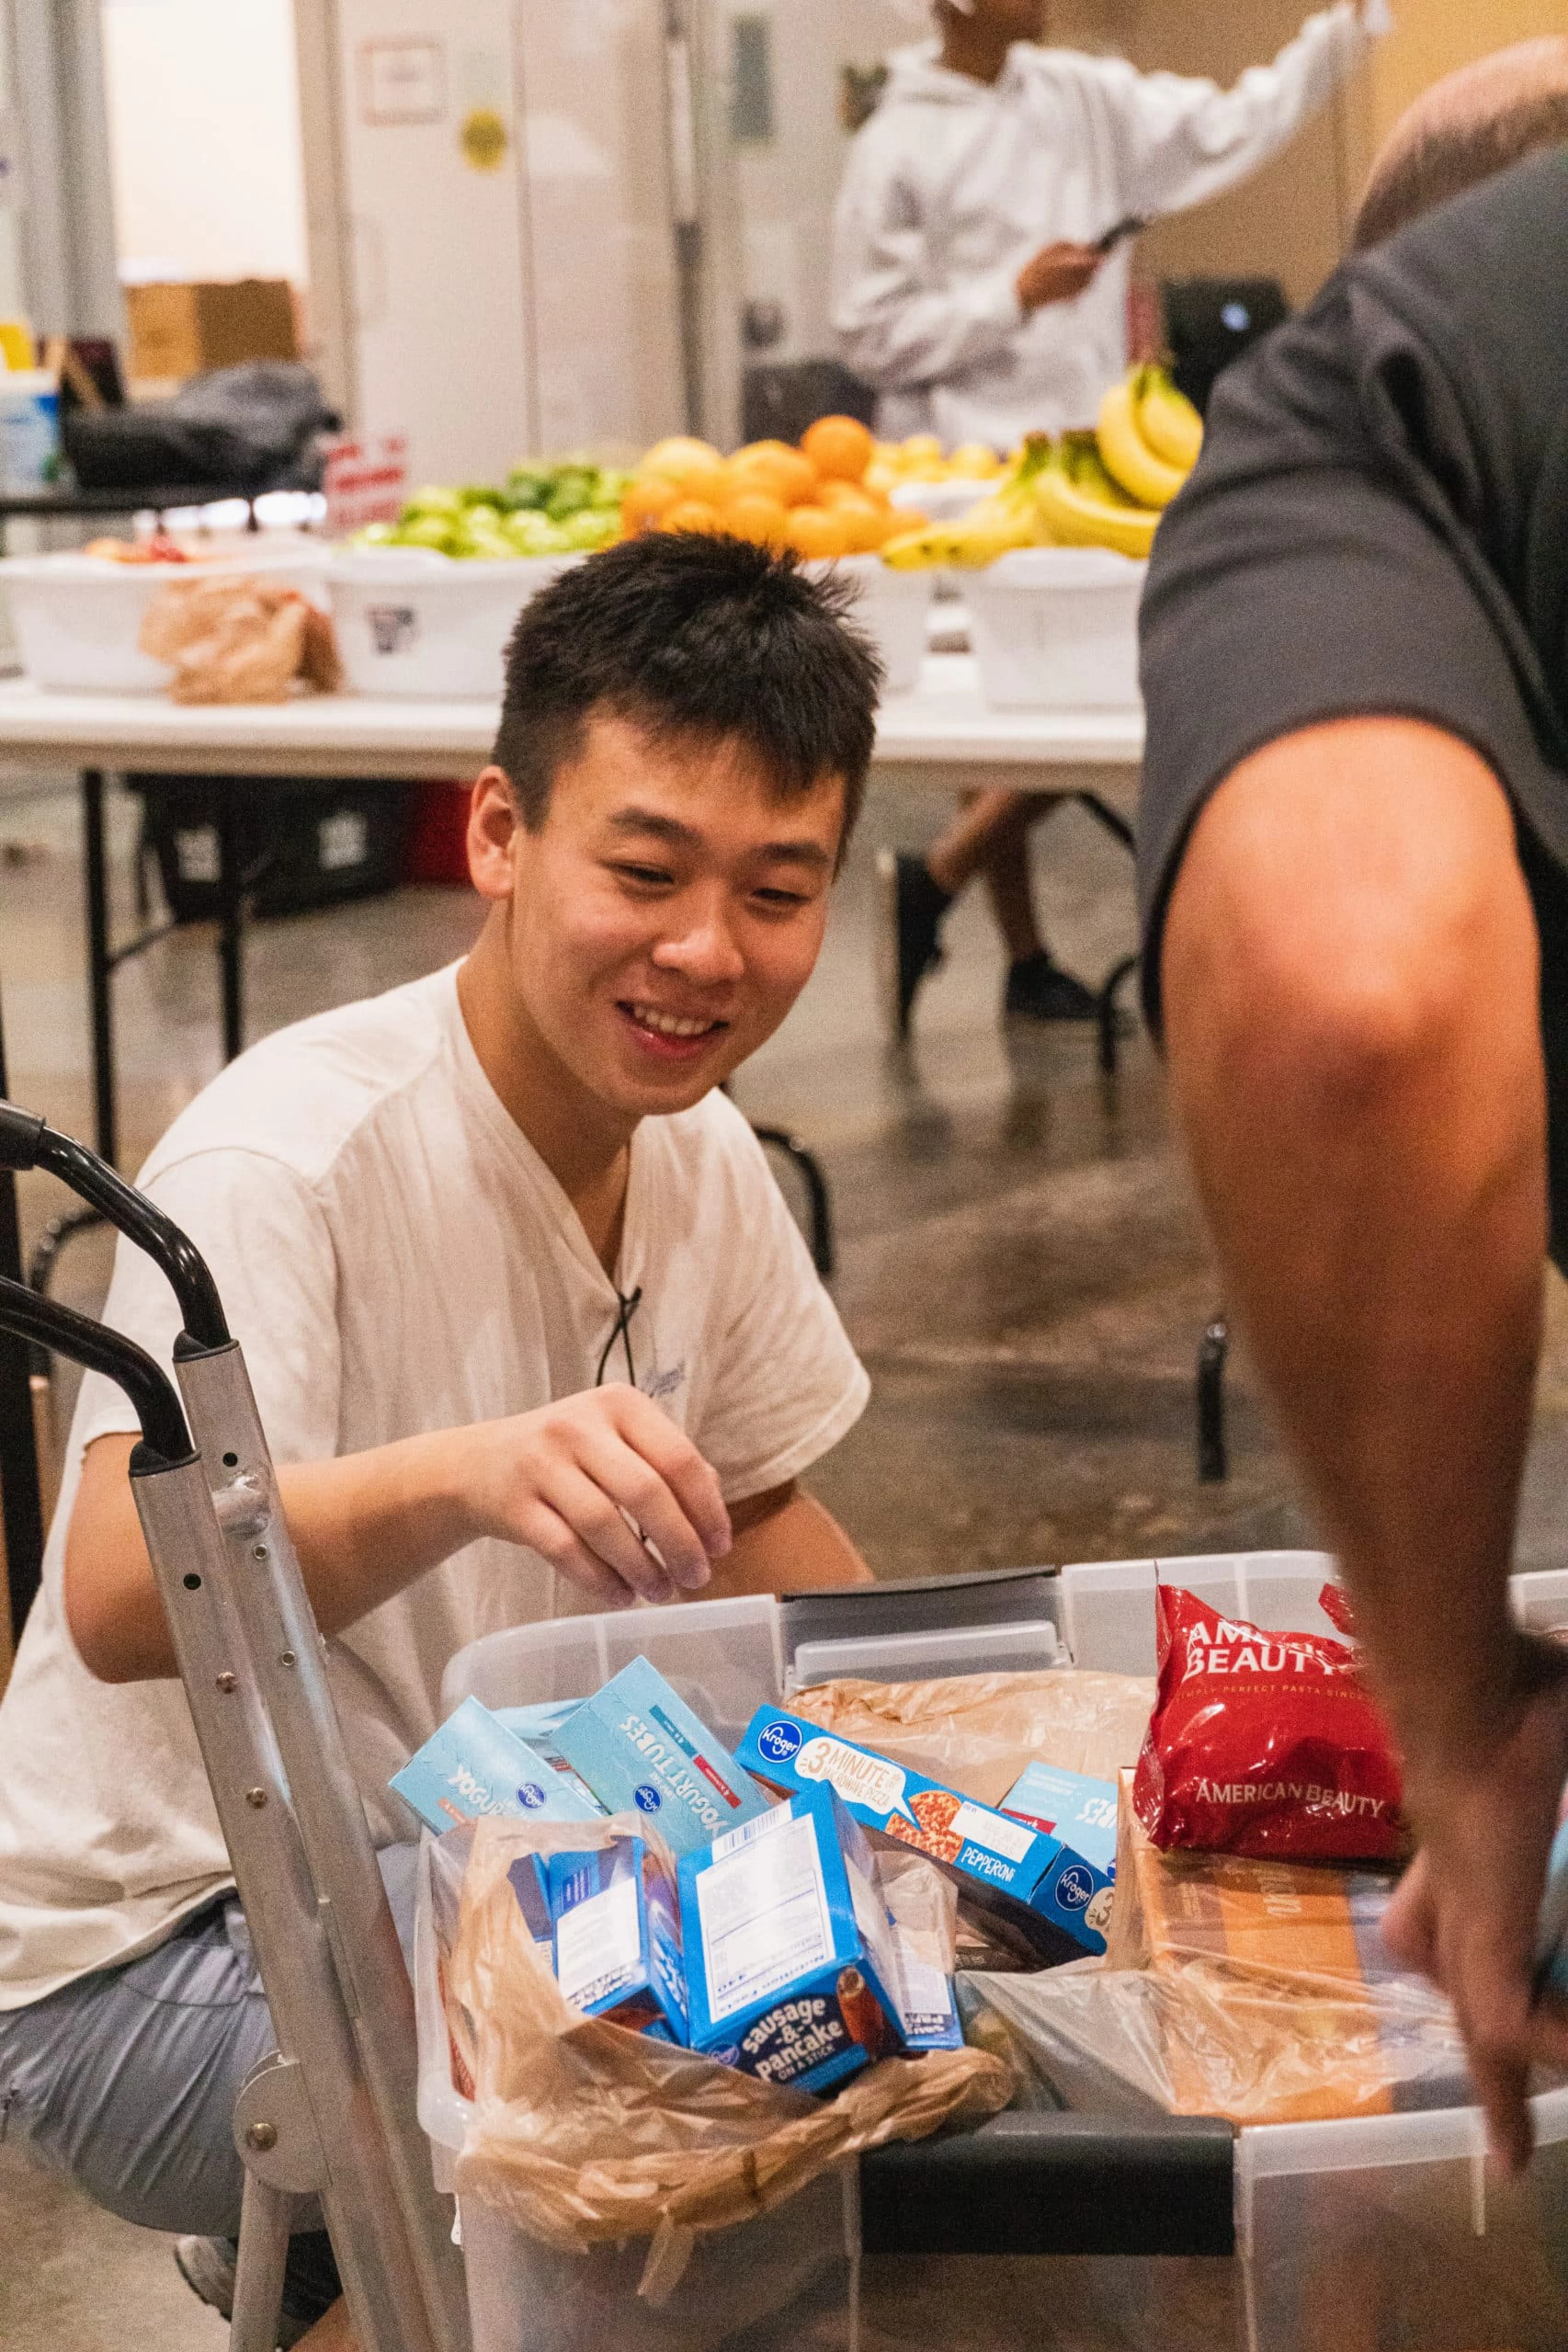 A man organizes food while smiling.